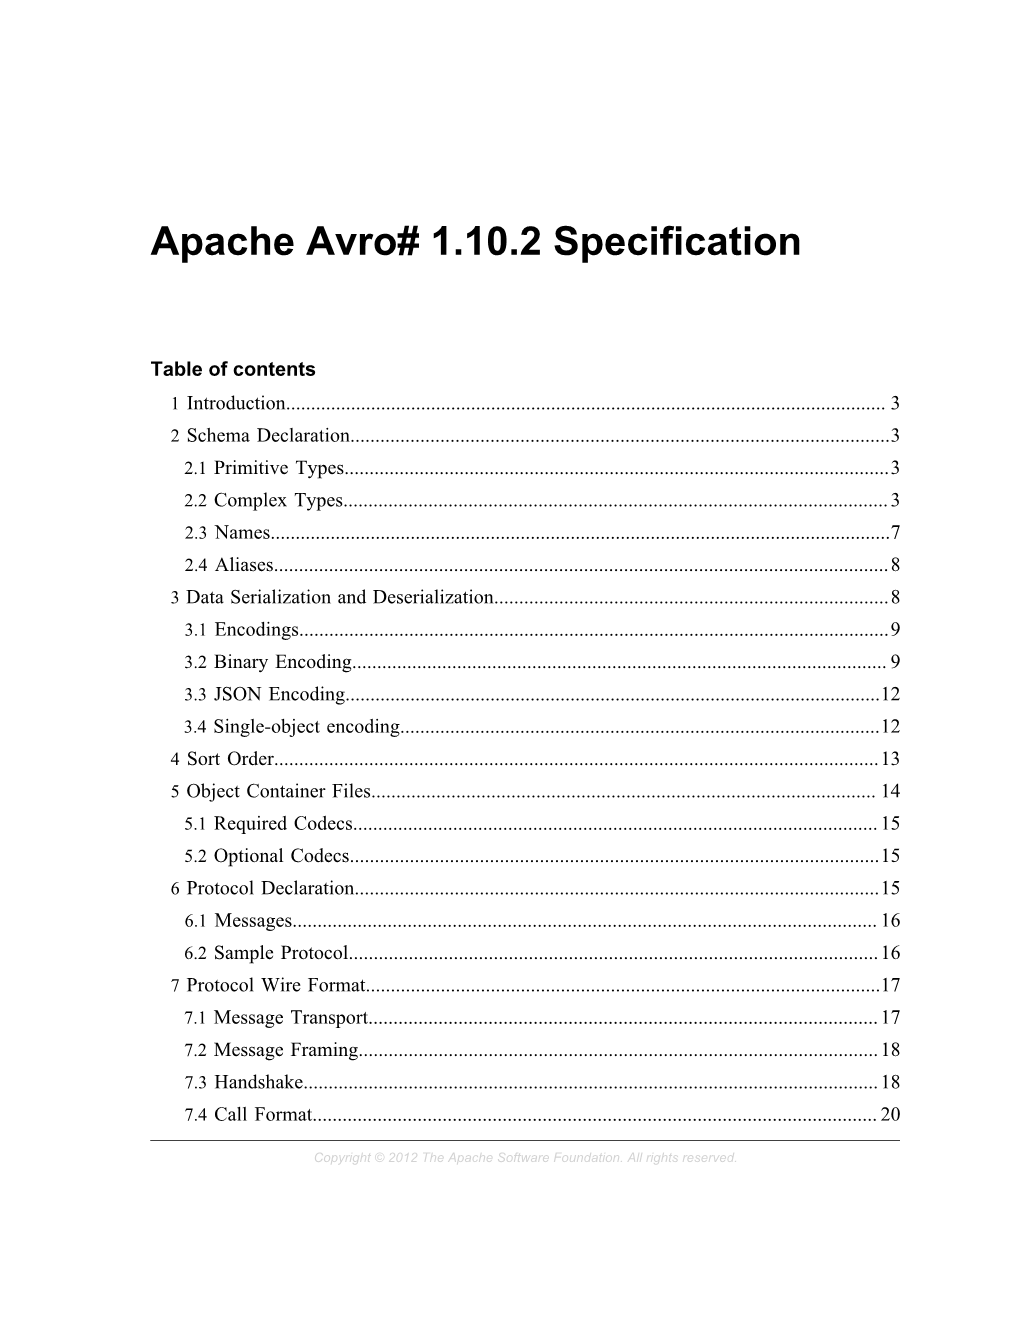 Apache Avro 1.10.2 Specification